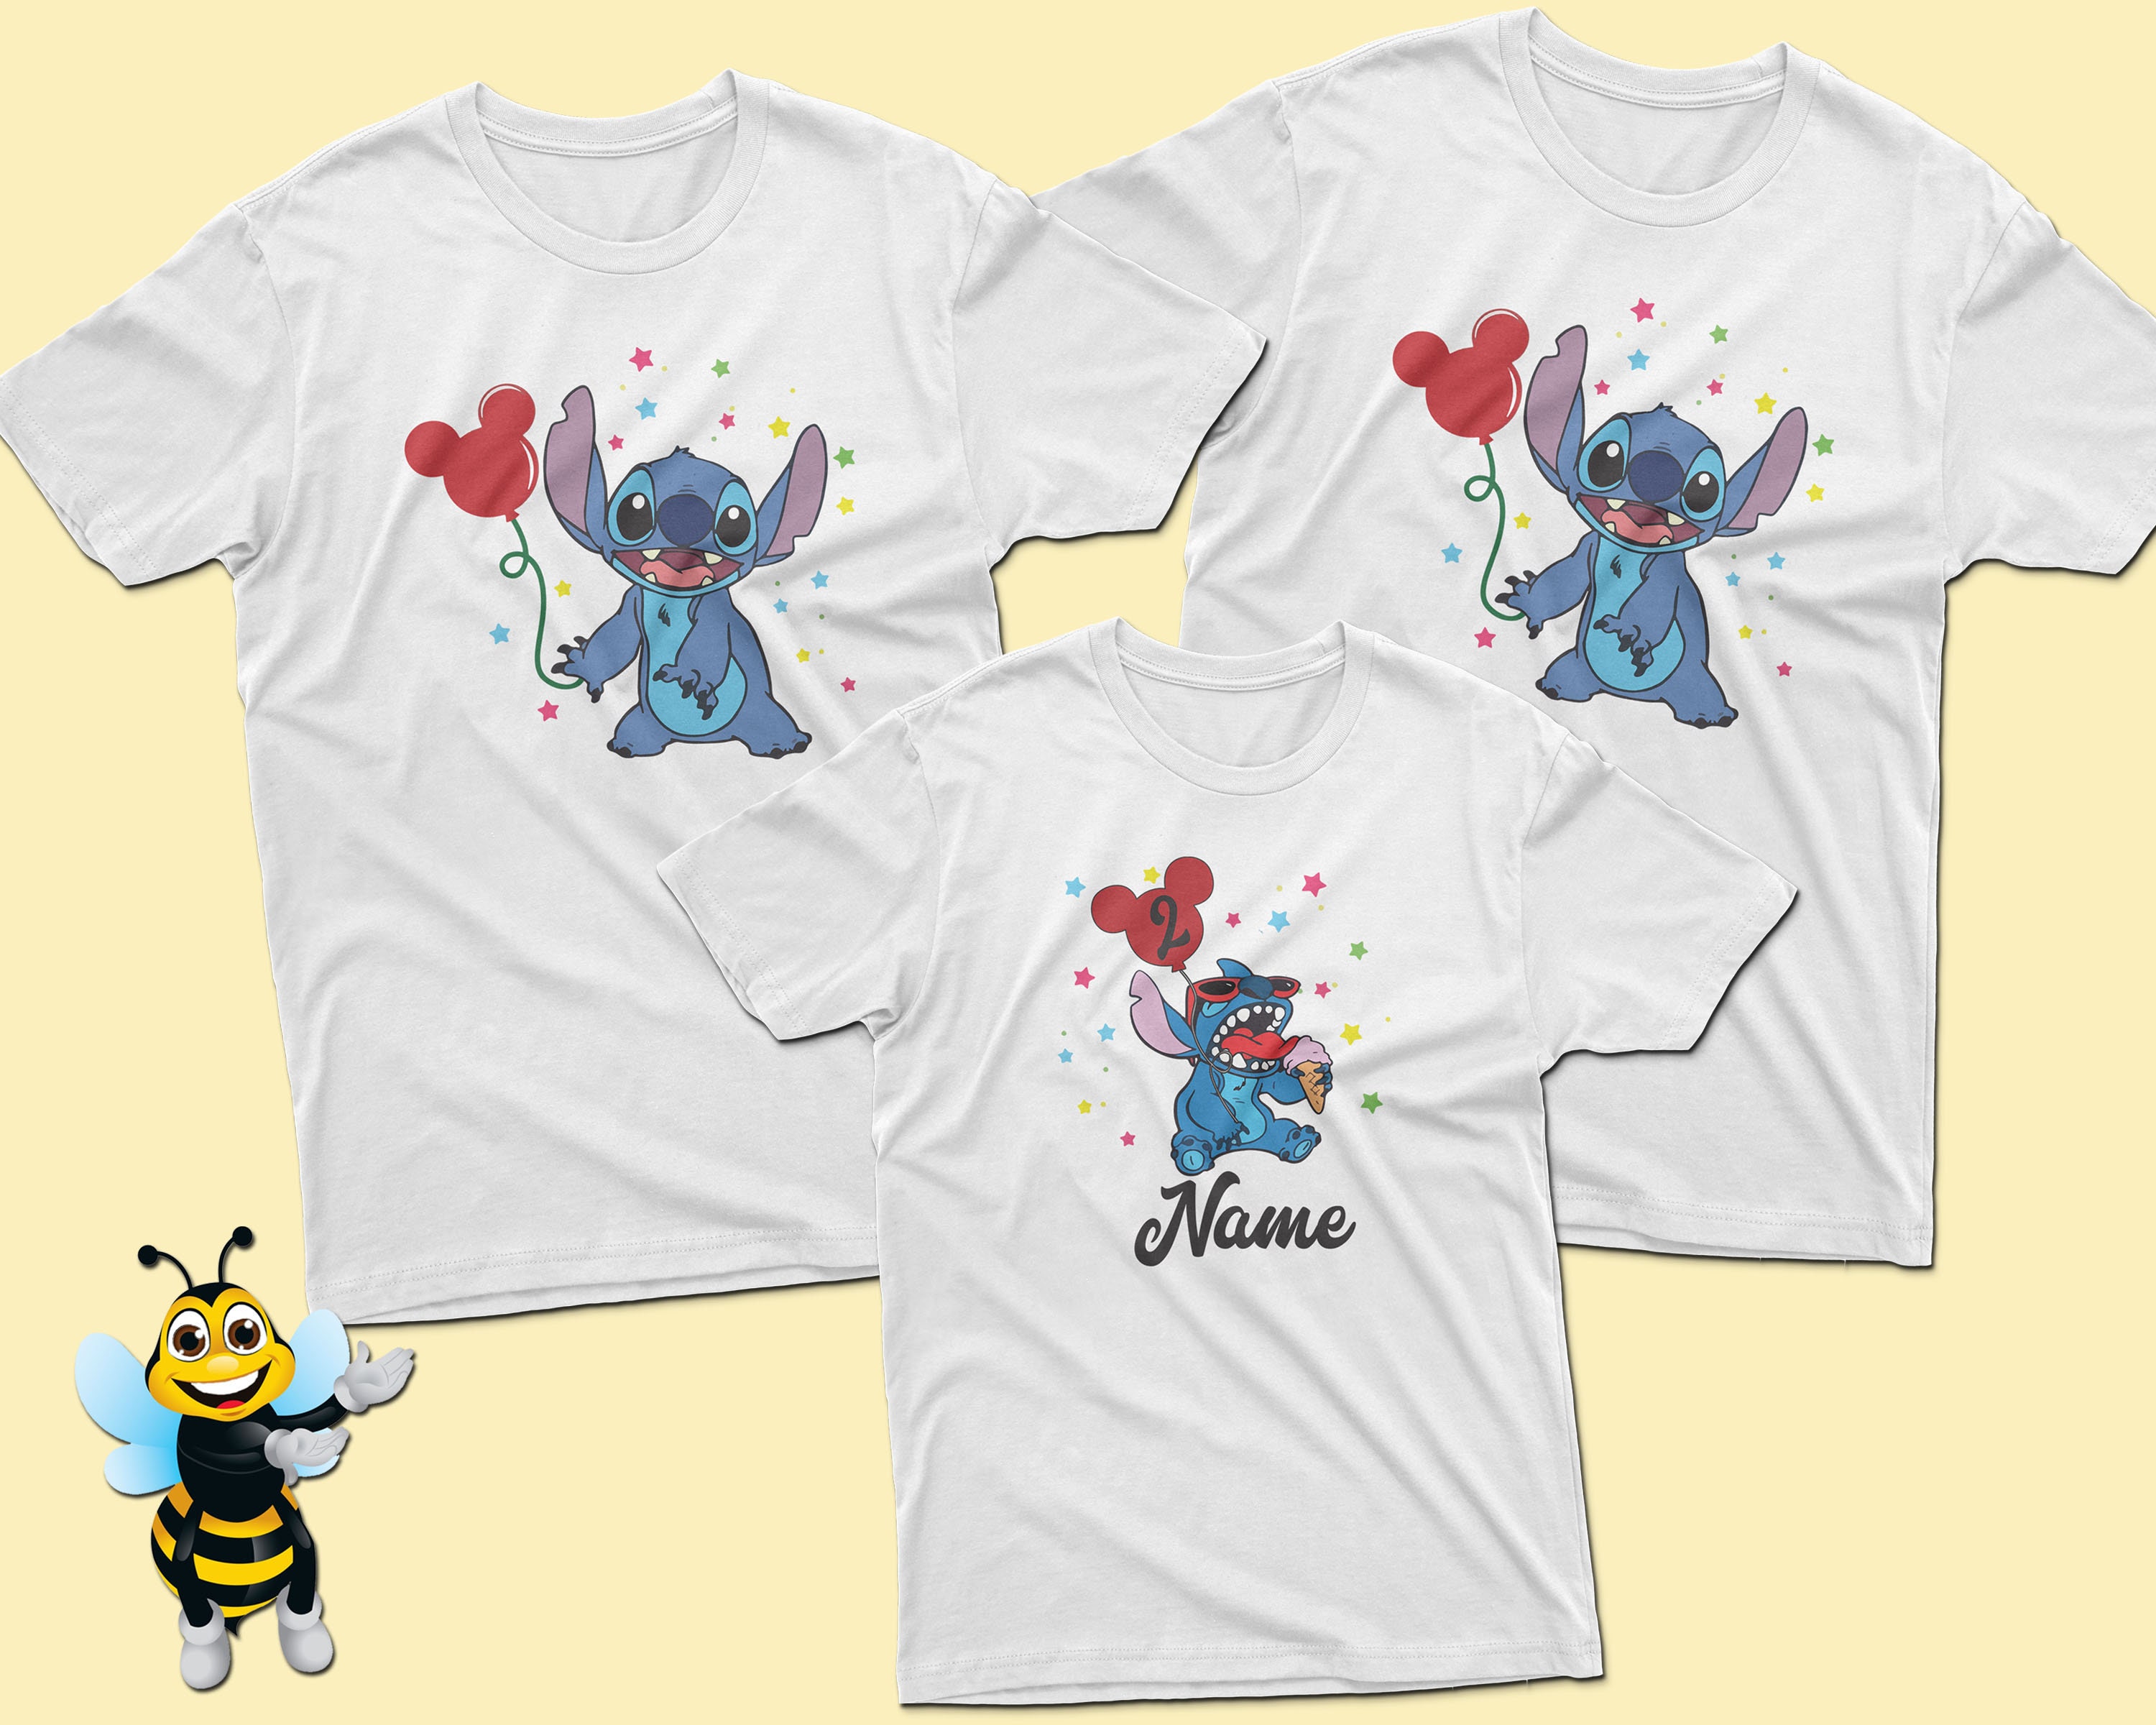 Stitch Birthday Shirts, Stitch and Lilo Inspired T-shirts, Family Birthday  Party Matching Shirts, Disney Trip Shirts, Adults and Kids Sizes 